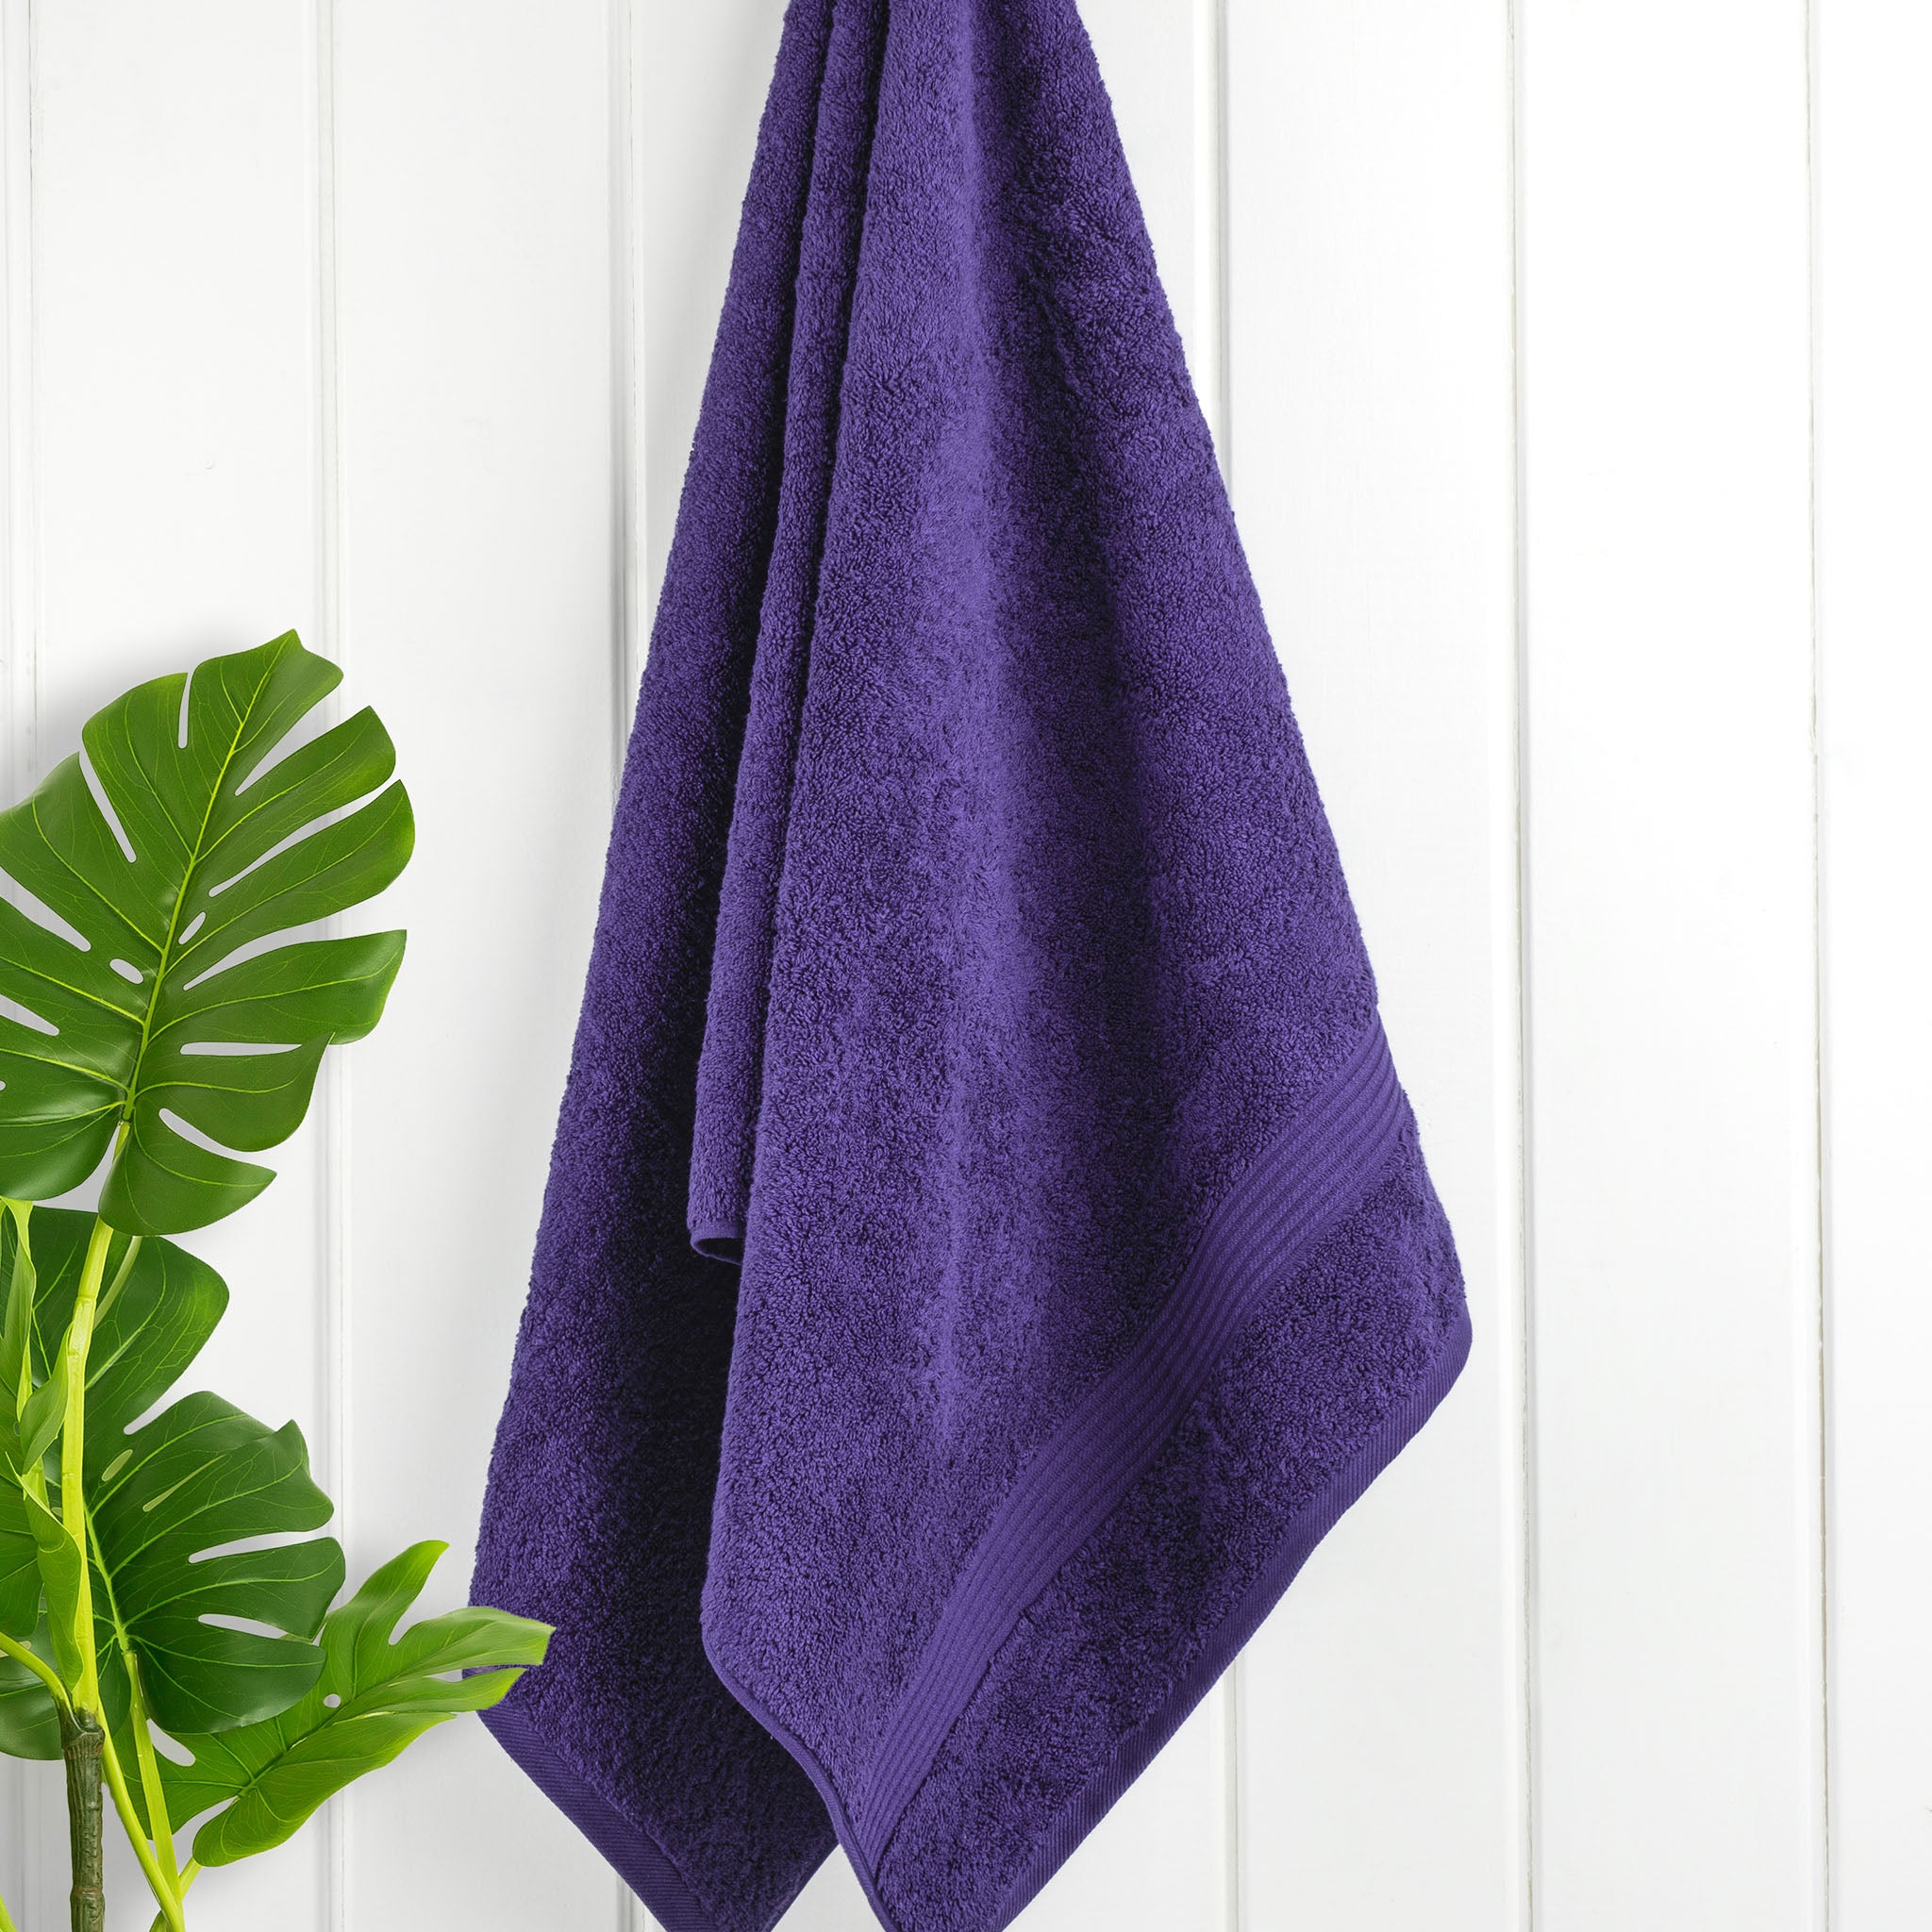 American Soft Linen Bekos 100% Cotton Turkish Towels, 4 Piece Bath Towel Set -purple-02